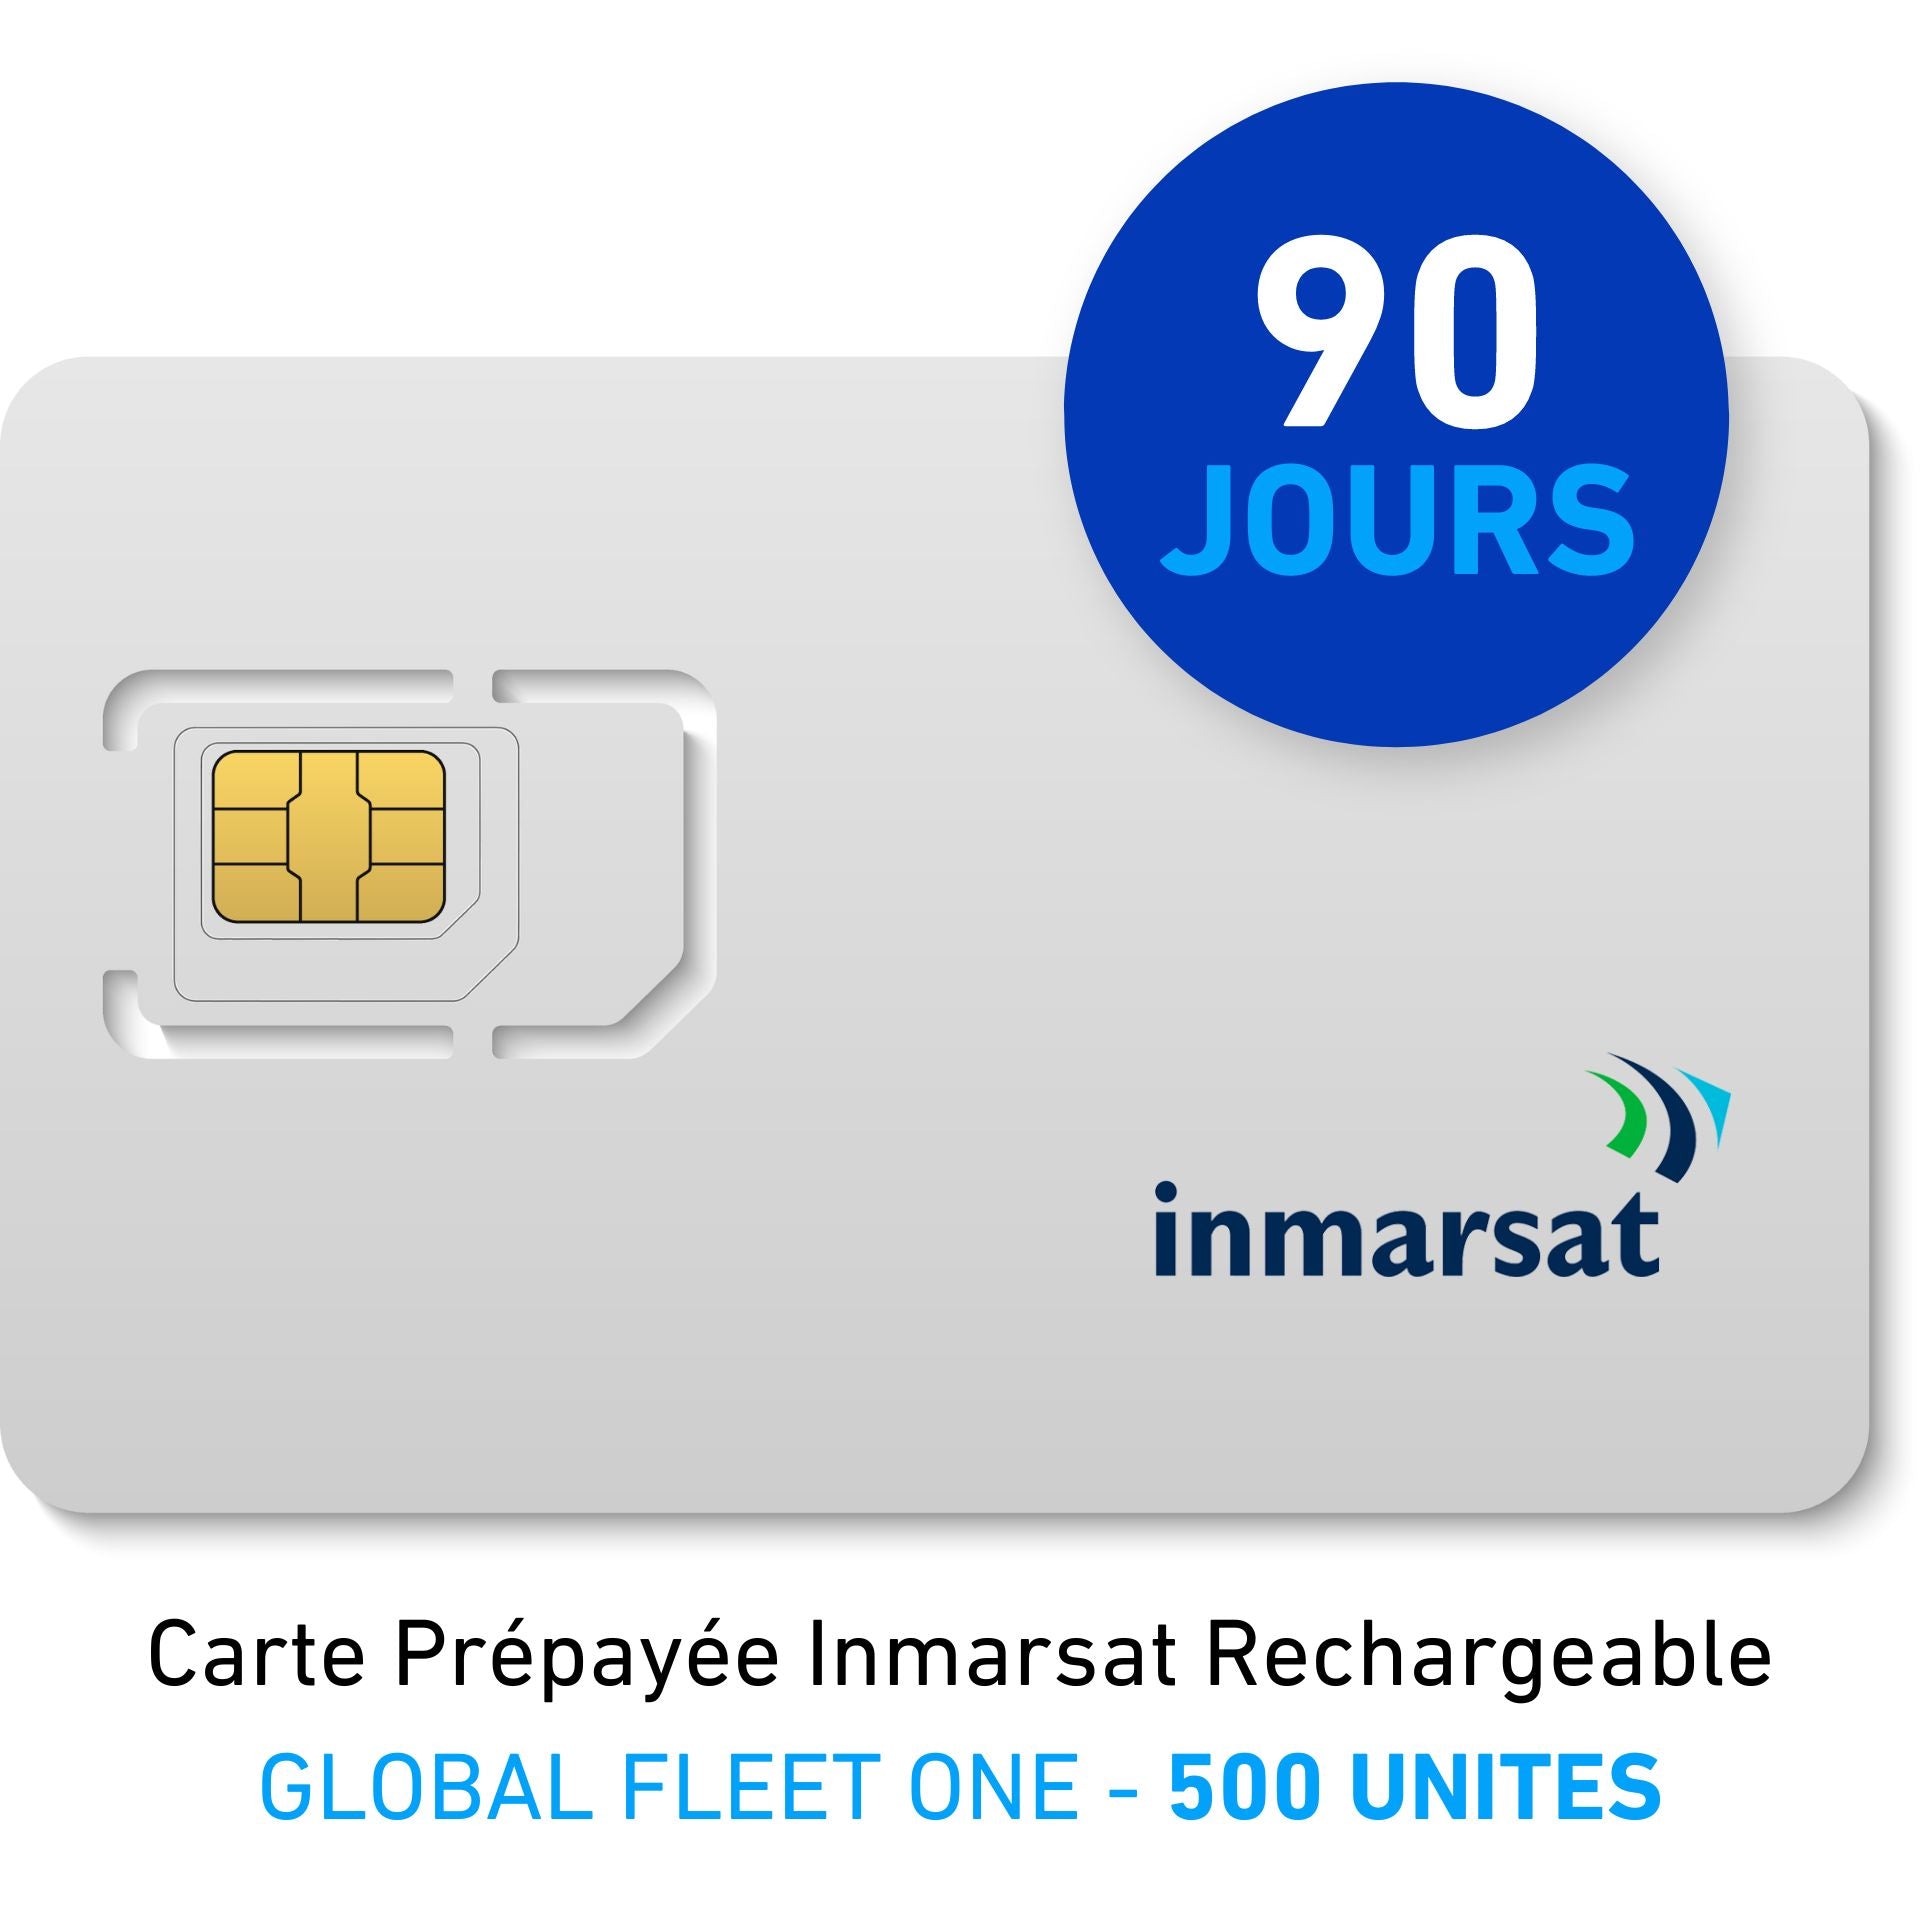 Carte Prépayée INMARSAT Rechargeable GLOBAL FLEET ONE - 500 UNITES - 90 JOURS